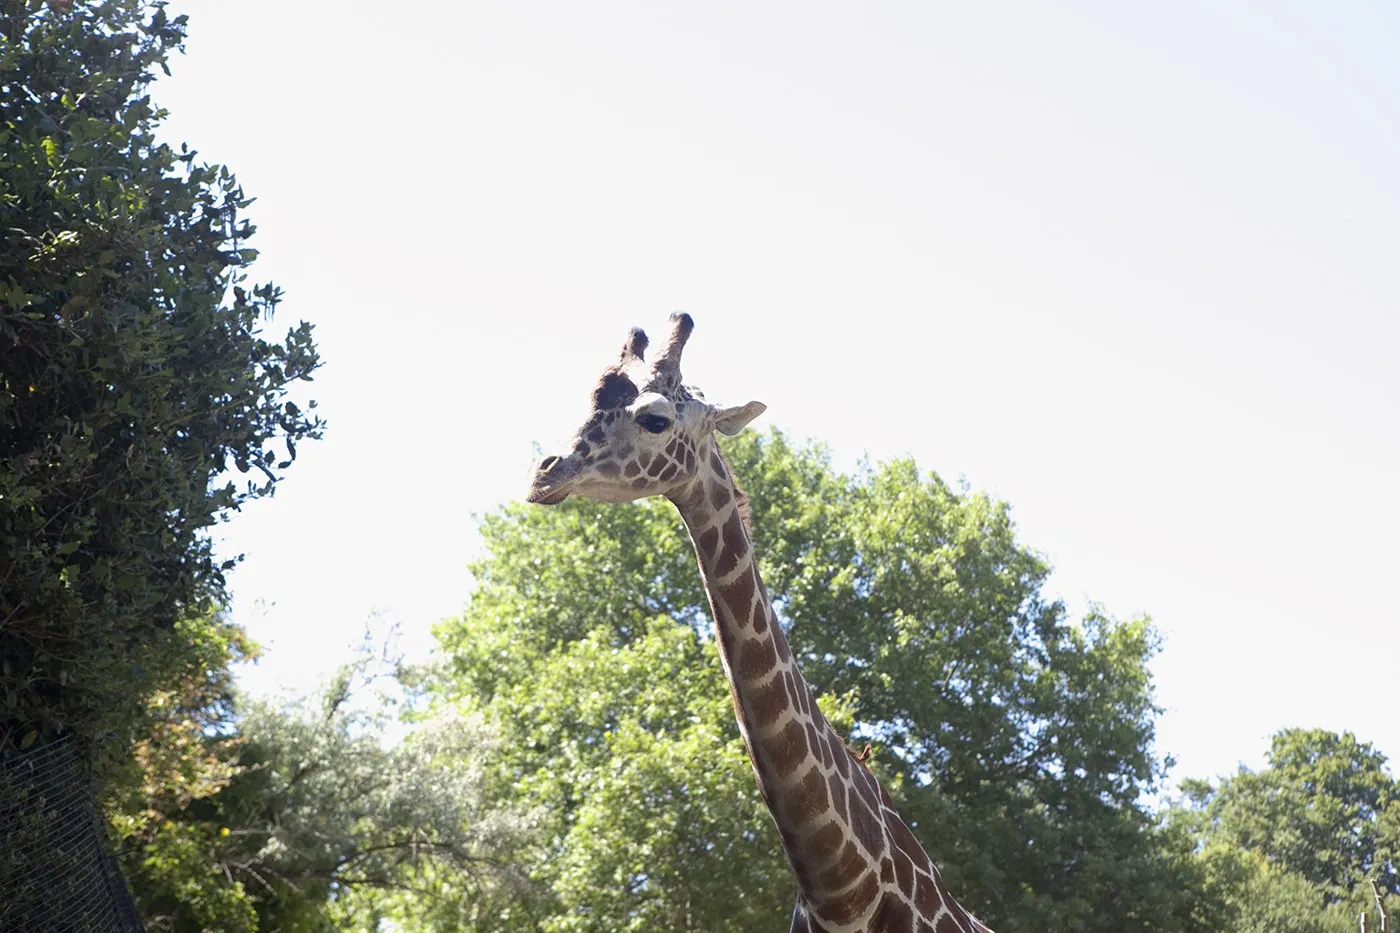 Giraffes at Woodland Park Zoo in Seattle, Washington.